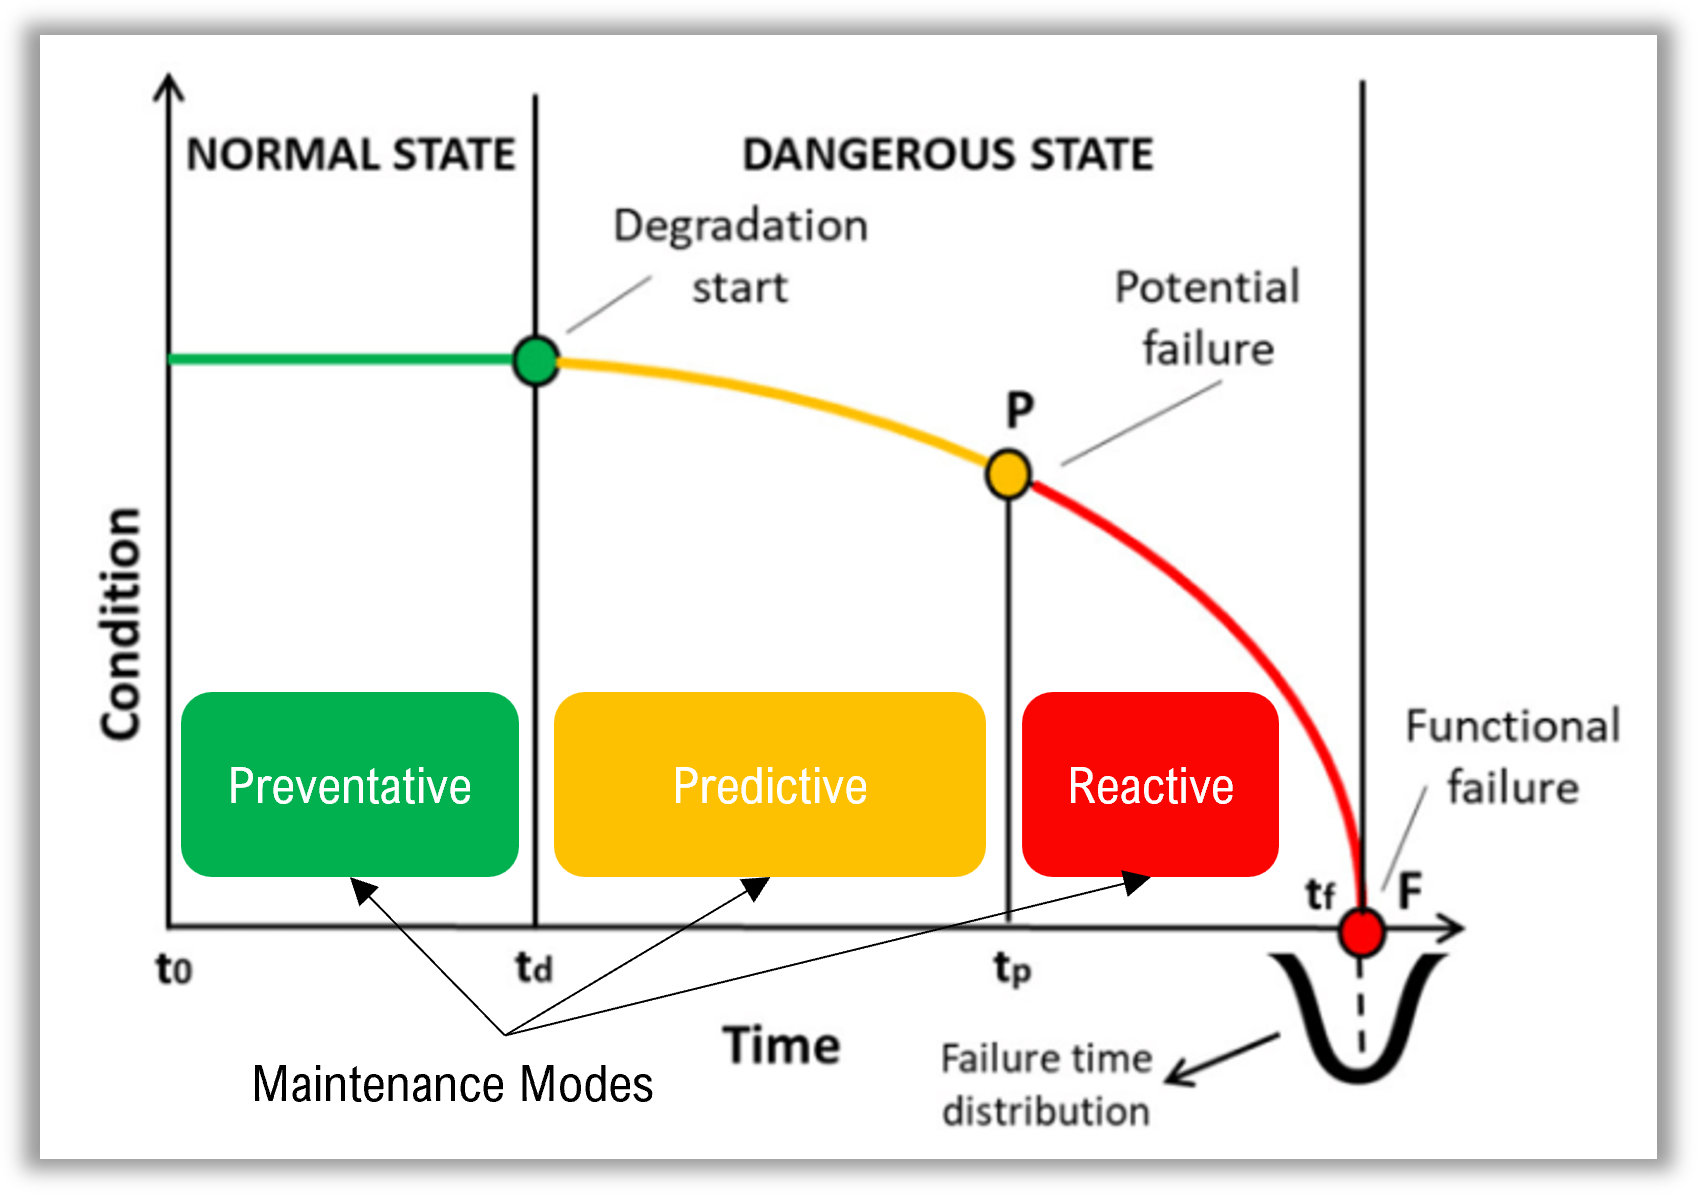 Maintenance Modes, Asset Condition vs Time to Failure